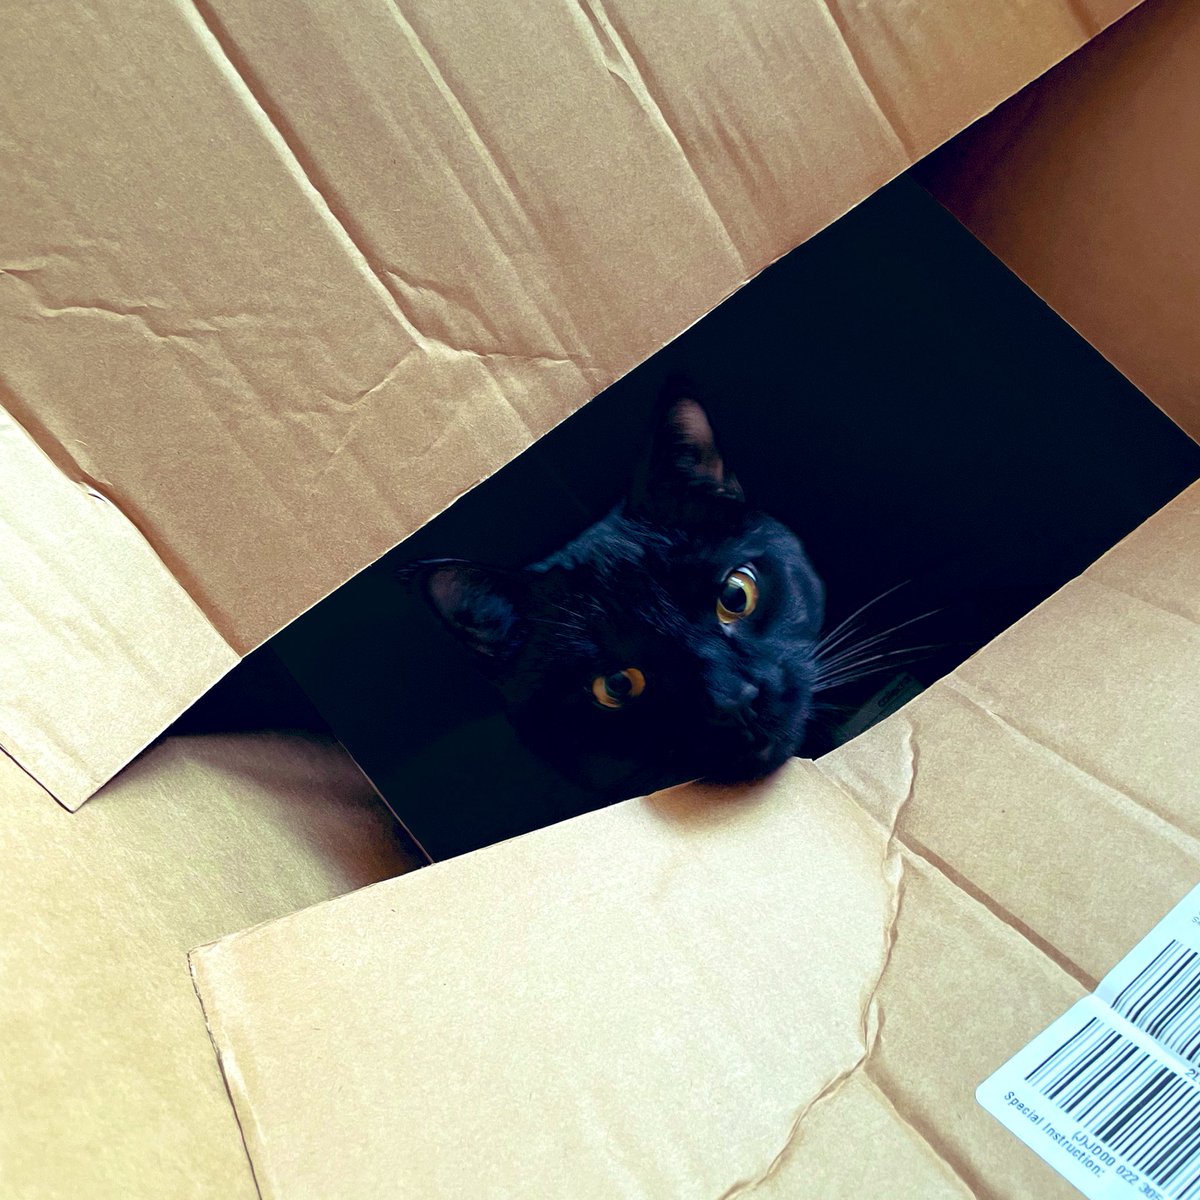 Cat in a box. Groundbreaking.